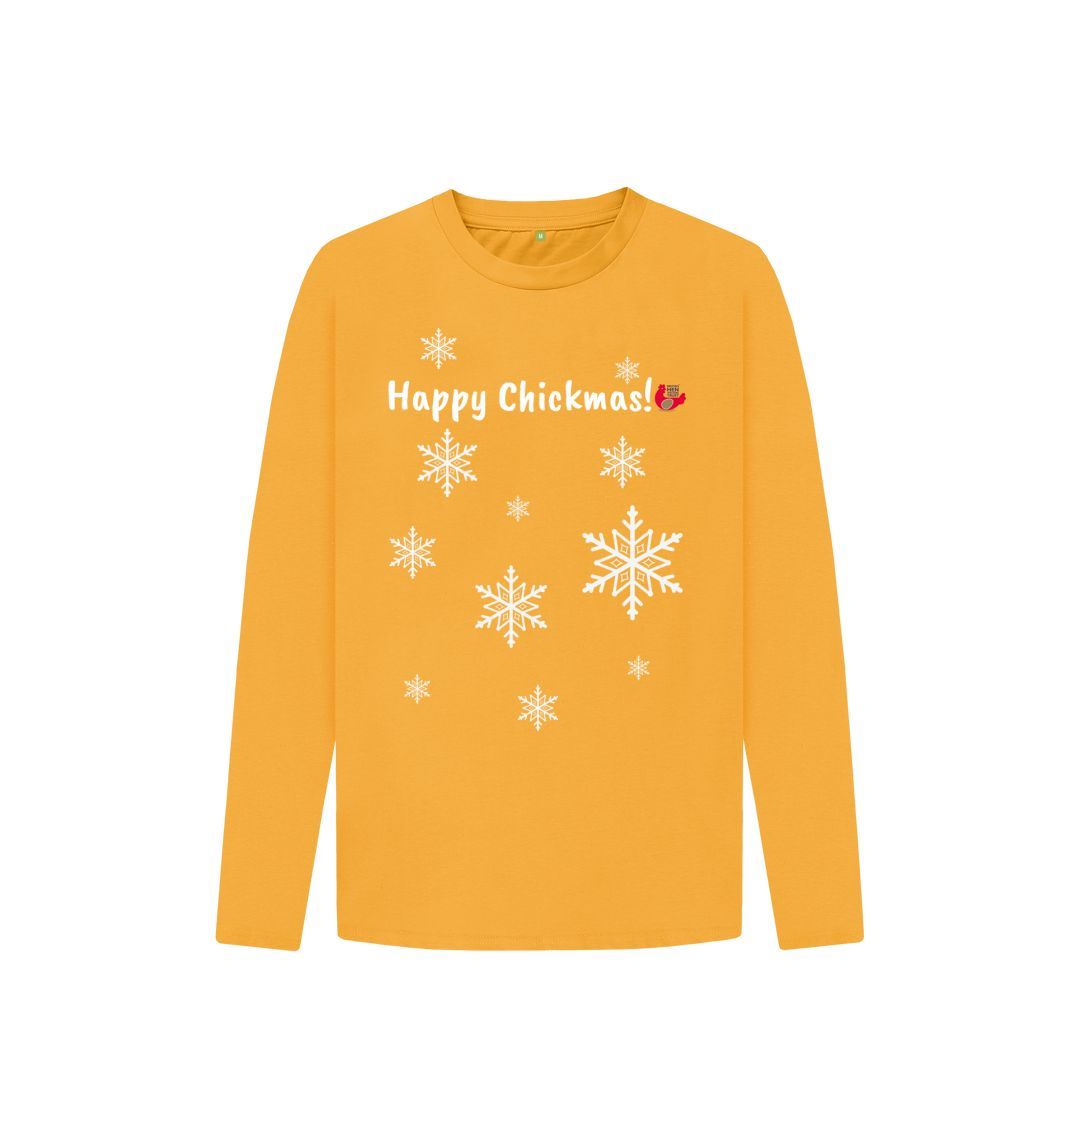 Mustard Kids Long Sleeve T-Shirt - Happy Chickmas! Snowflakes